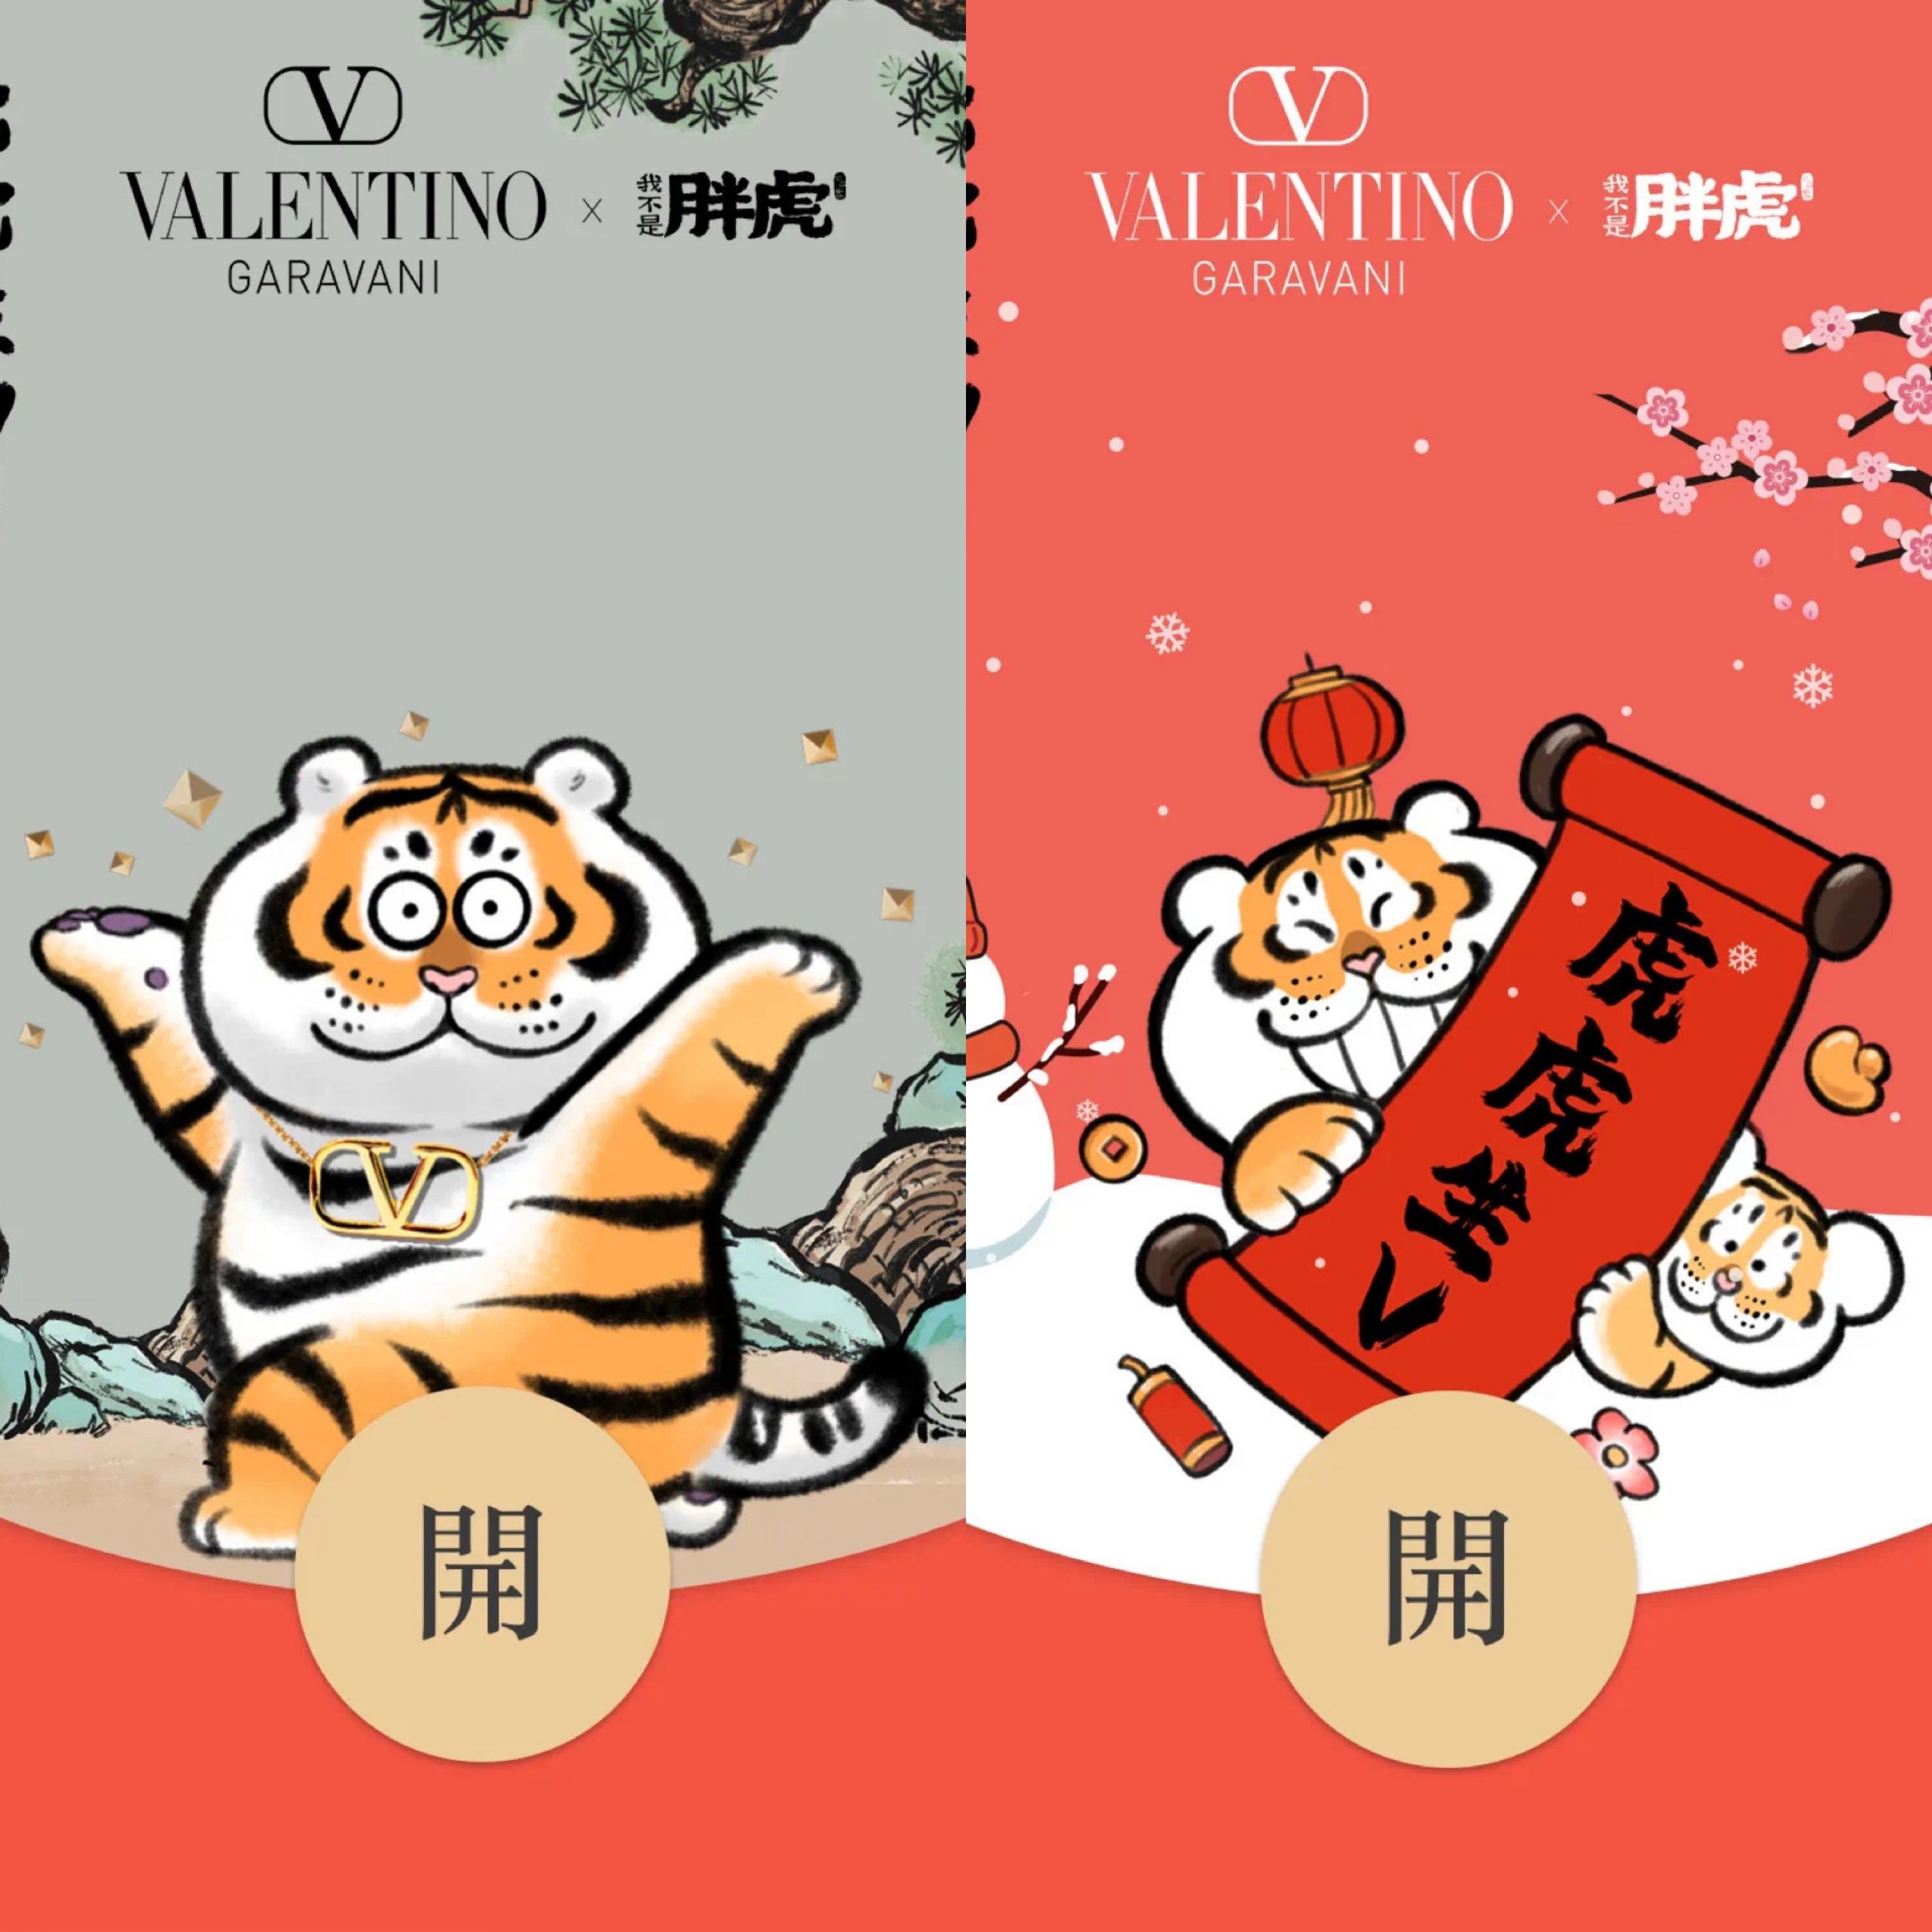 Valentino虎年春节营销与名 “虎” IP联名的红包封面